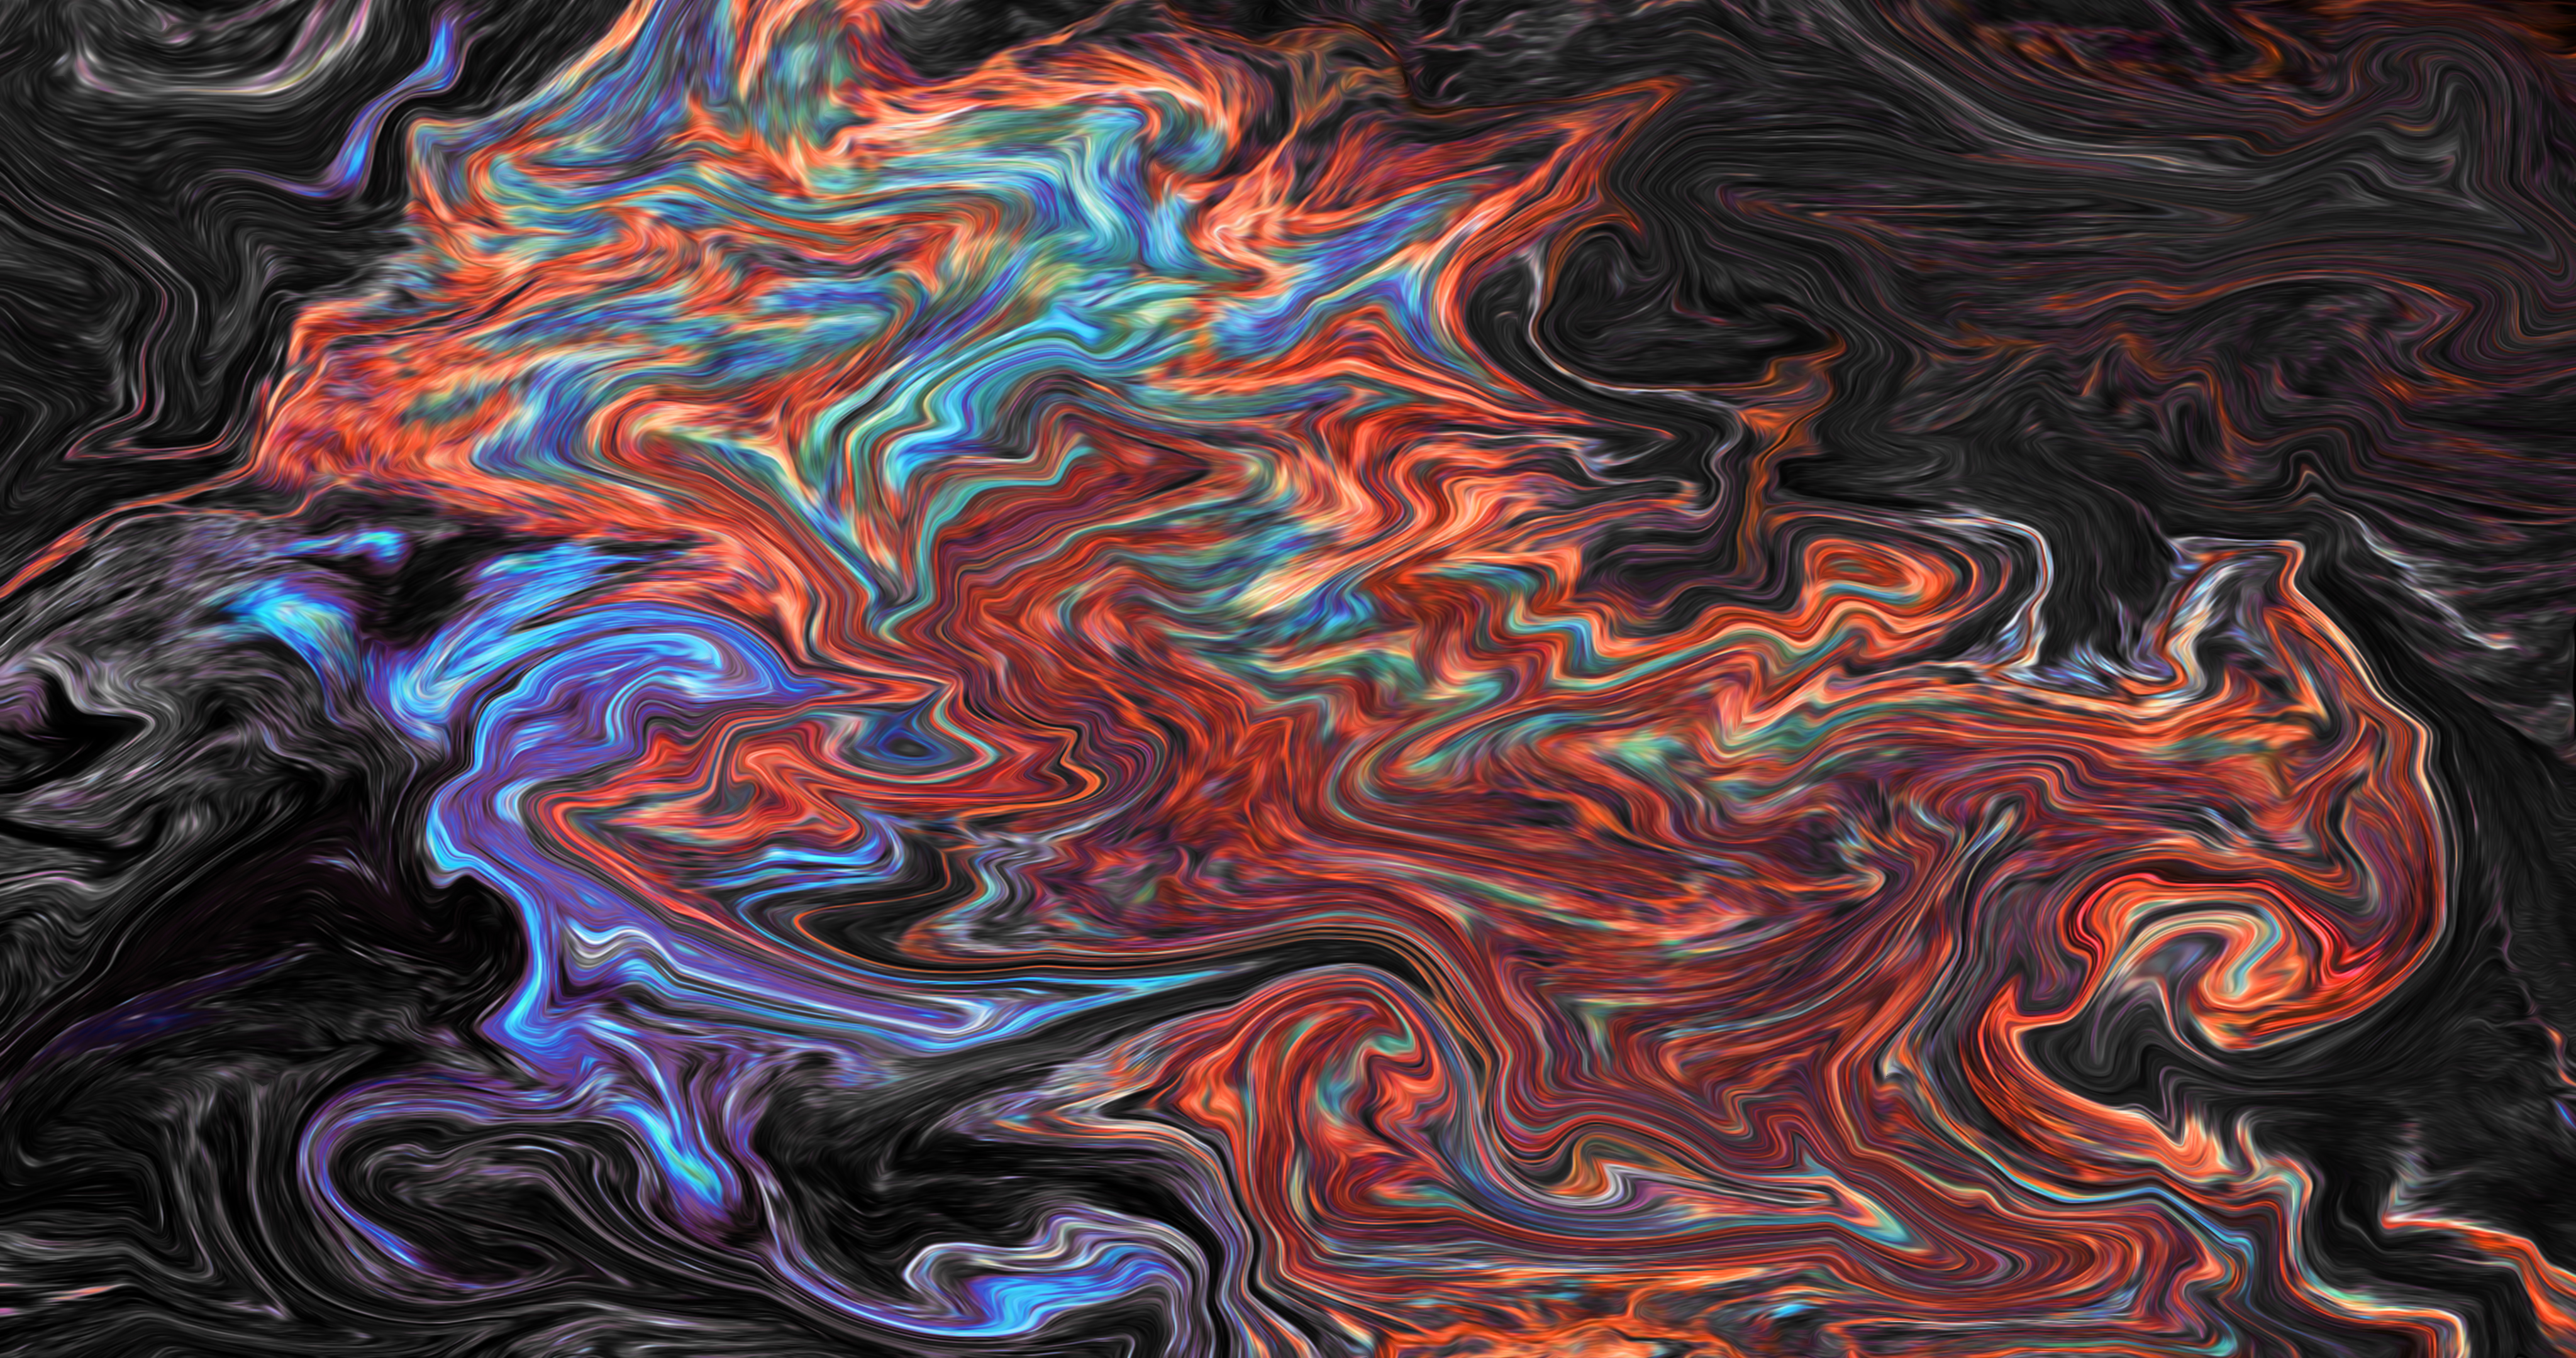 General 4096x2160 abstract fluid liquid artwork colorful ArtStation brush paint brushes shapes XEBELION universe space digital art